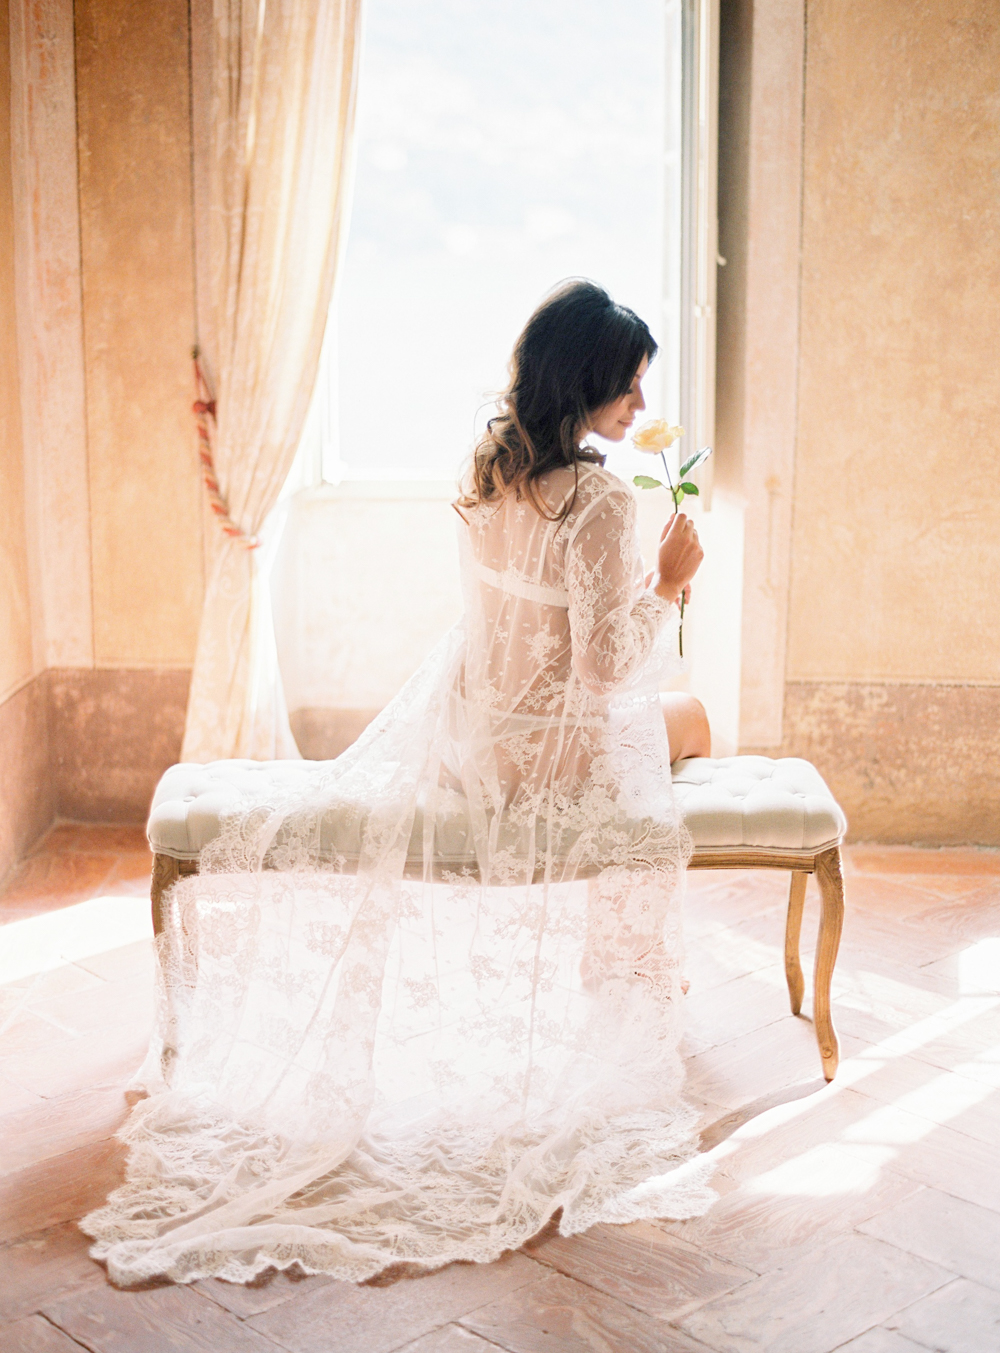 Bride in Lace robe